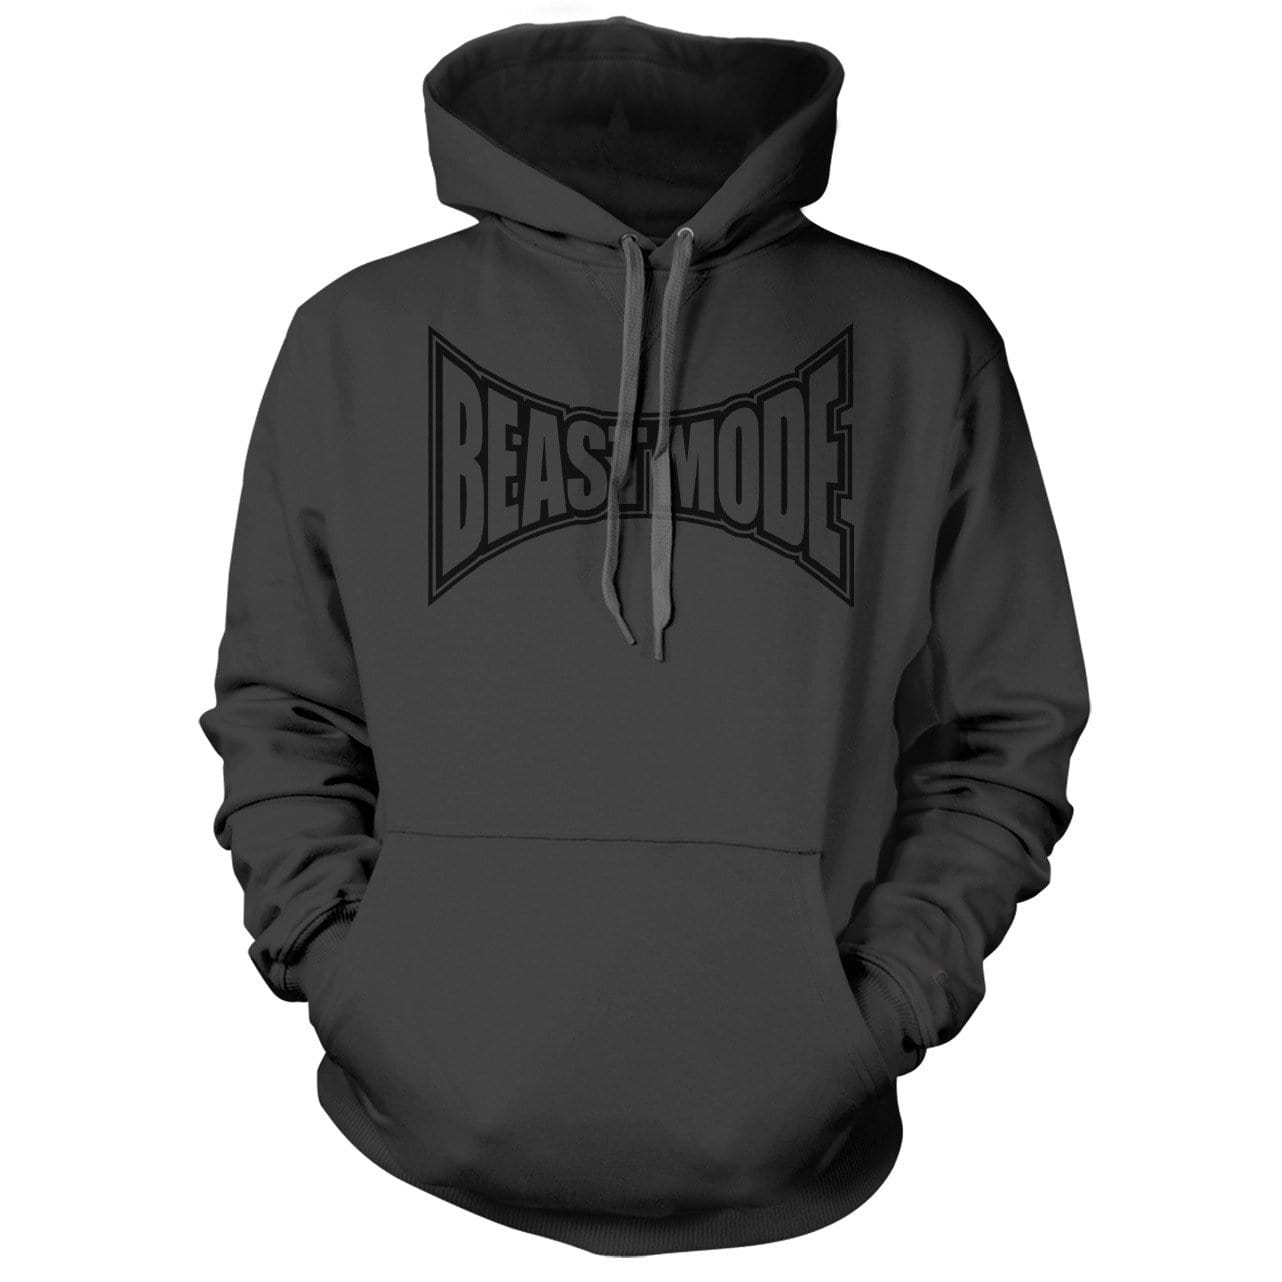 Beast Mode Charcoal Hoodie - We Got Teez